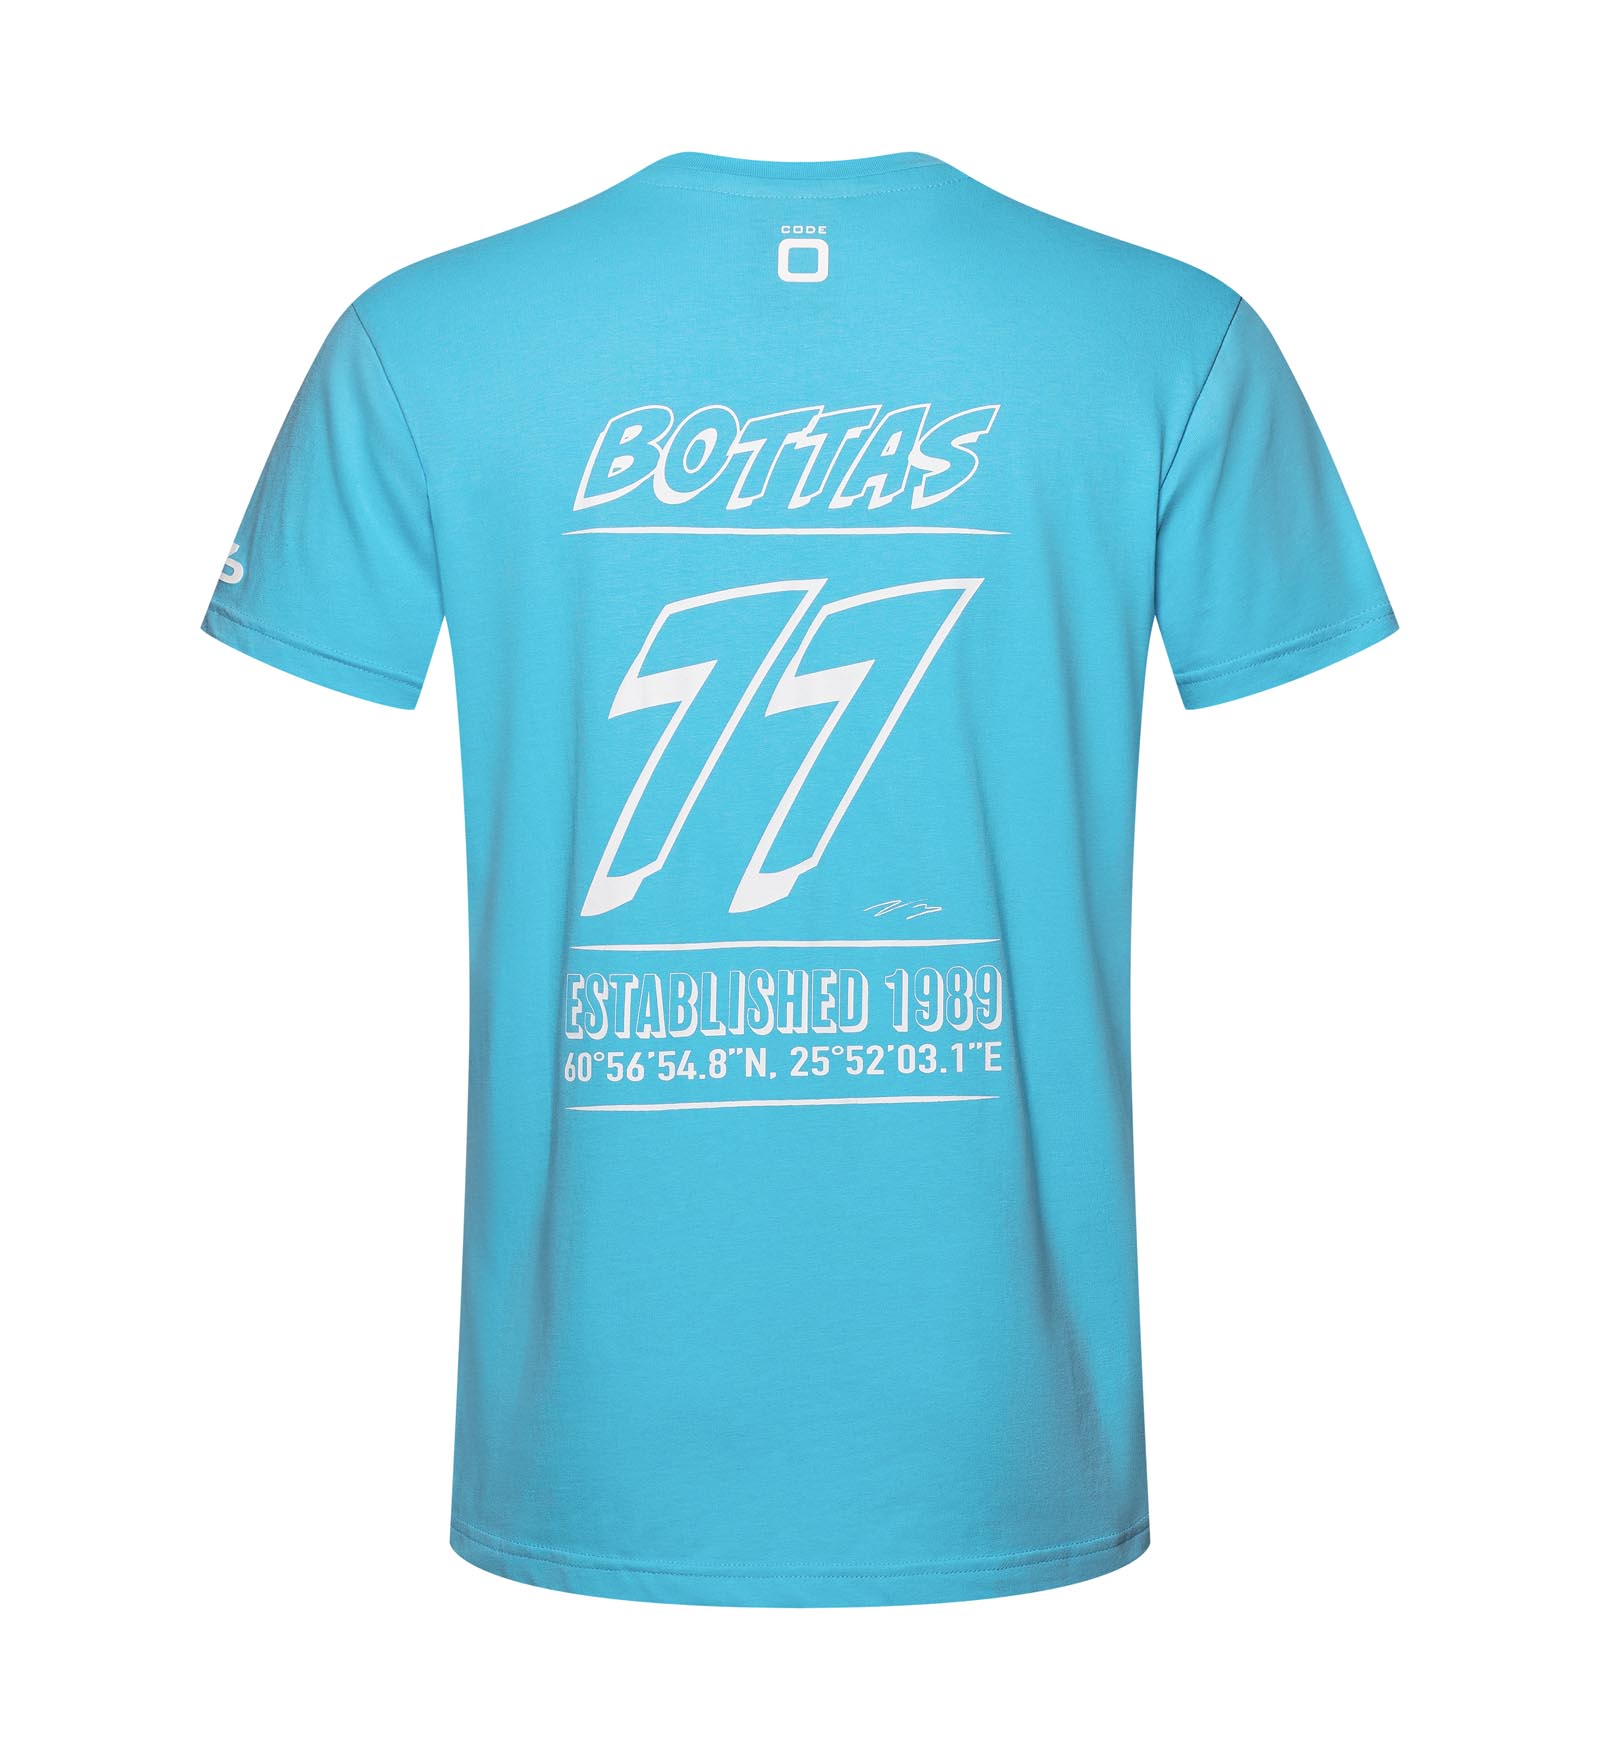 T-Shirt #TeamBottas